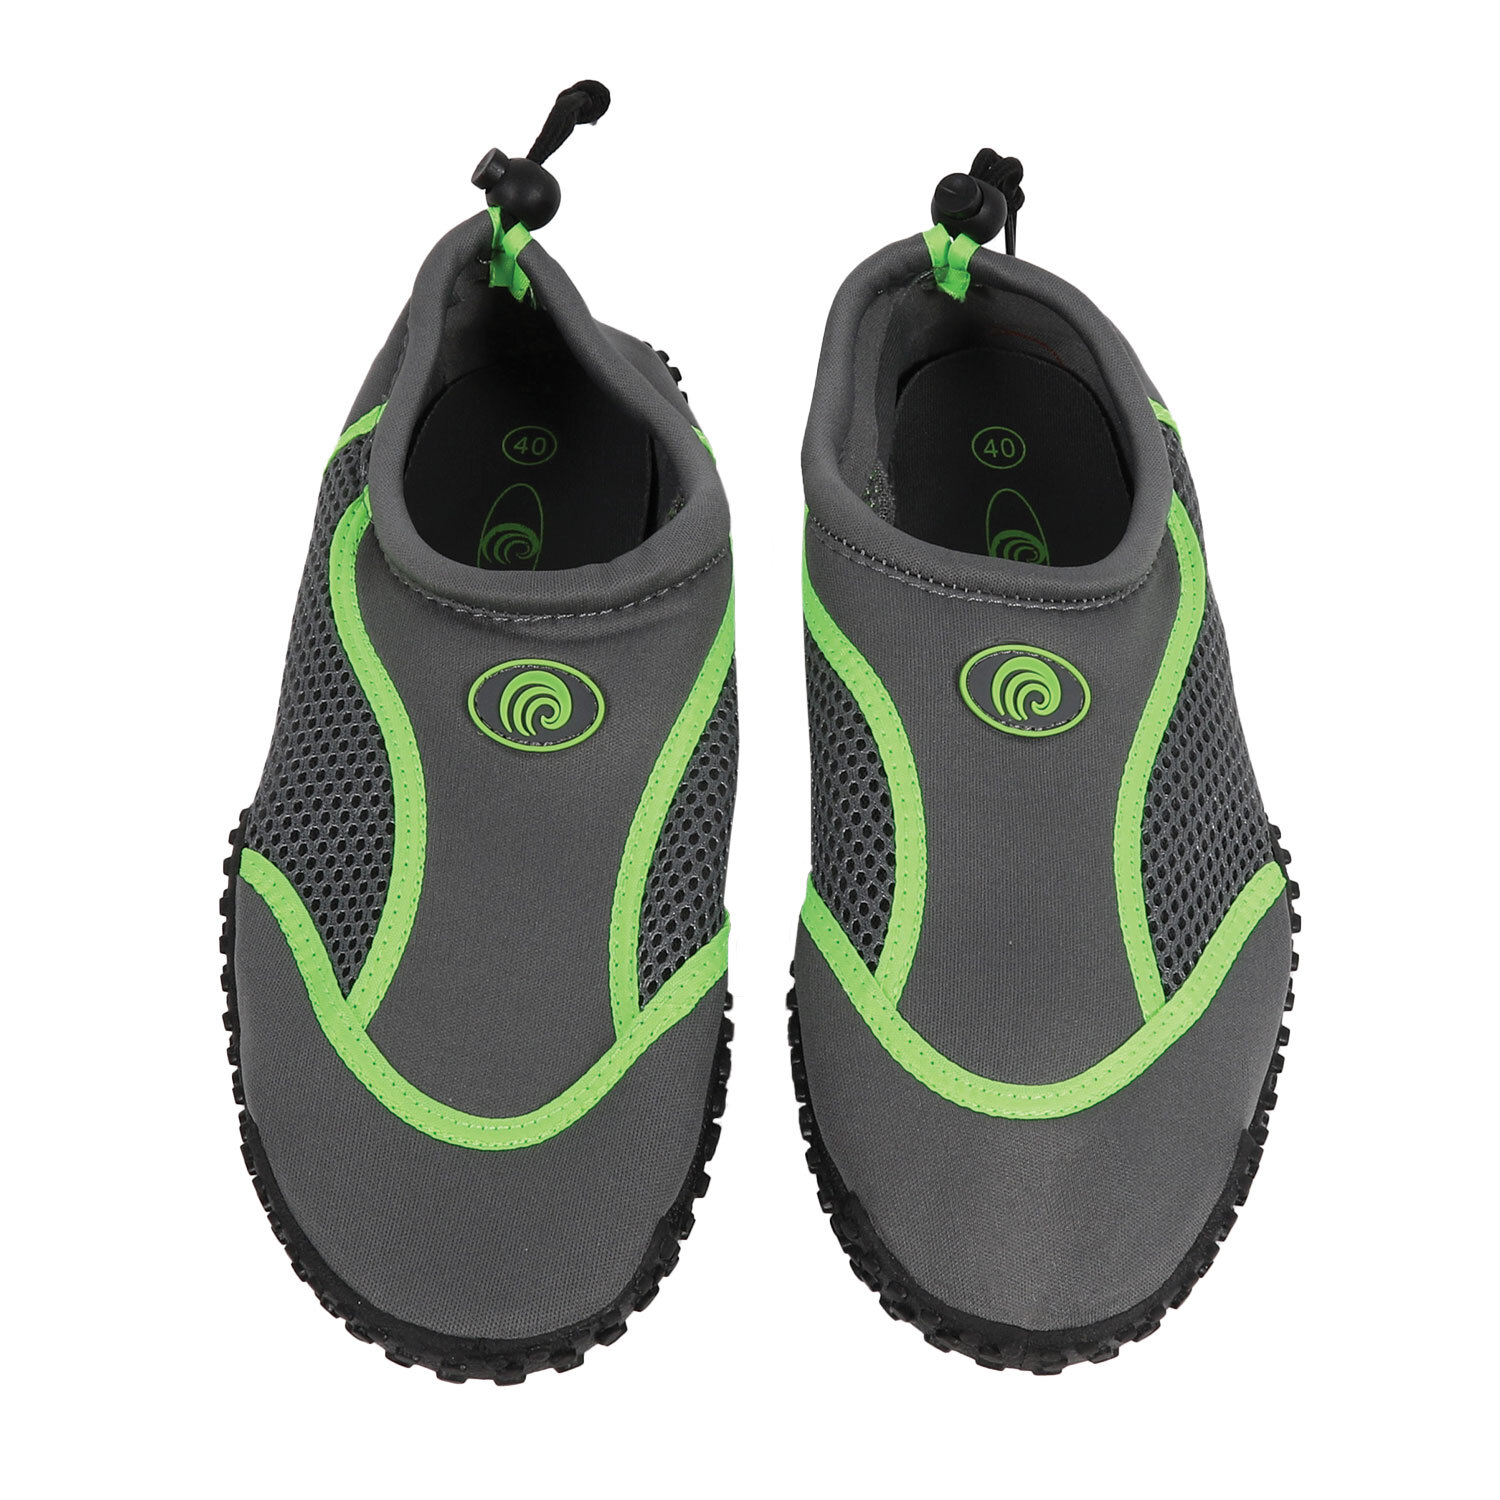 Men's Water Shoes - Grey Image 1